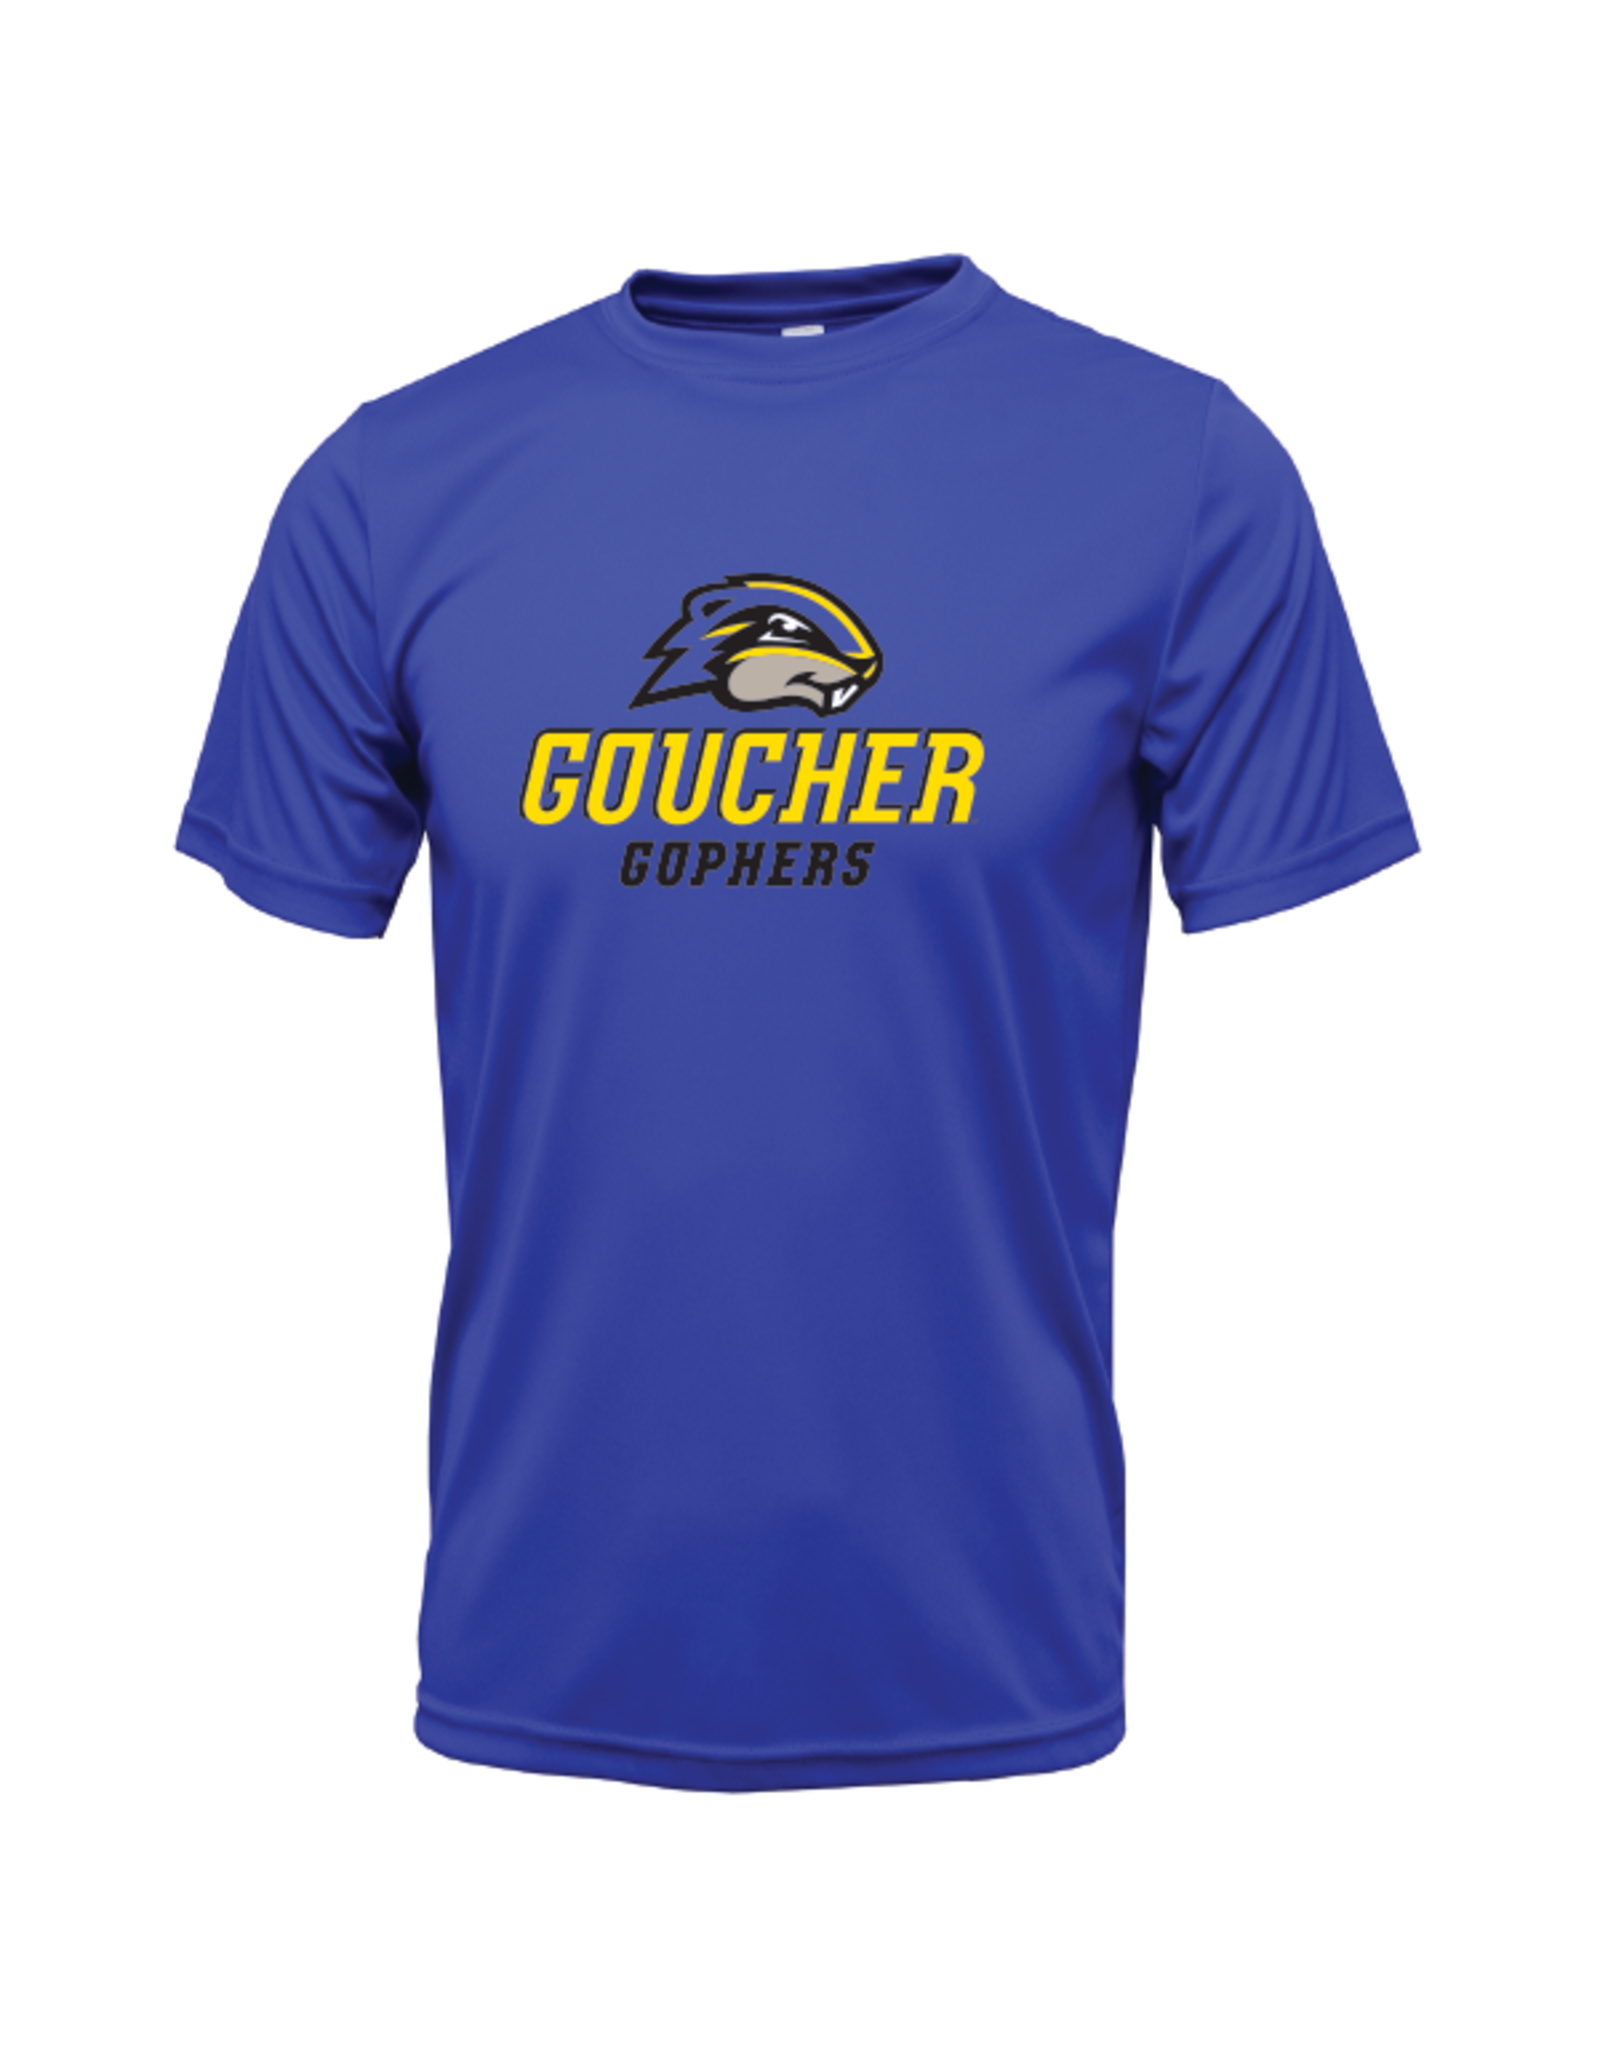 BAW Men's Xtreme-Tek T-Shirt "Goucher Gophers"